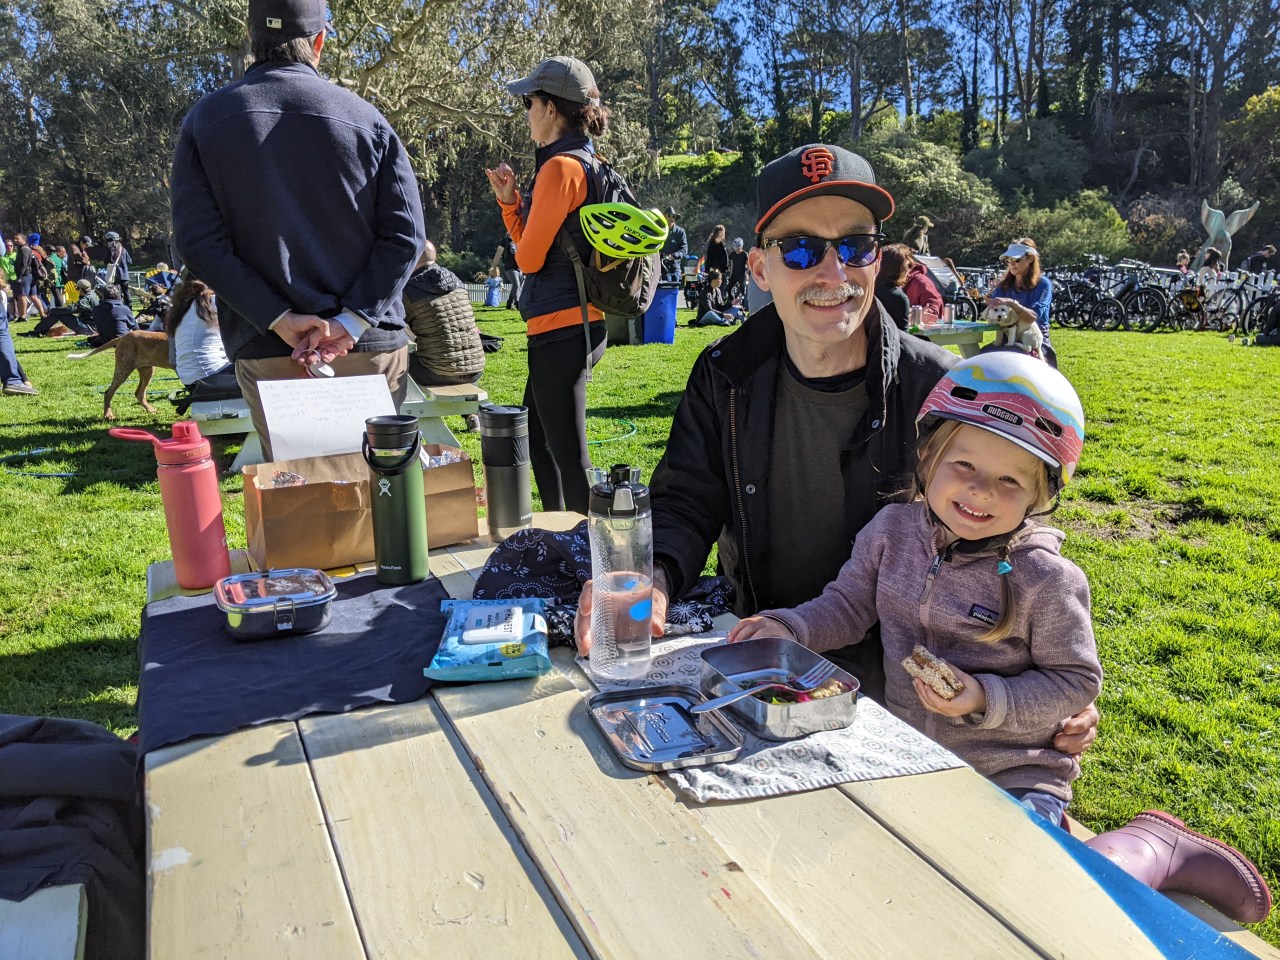 Mark Hogan with his daughter at Saturday's celebration